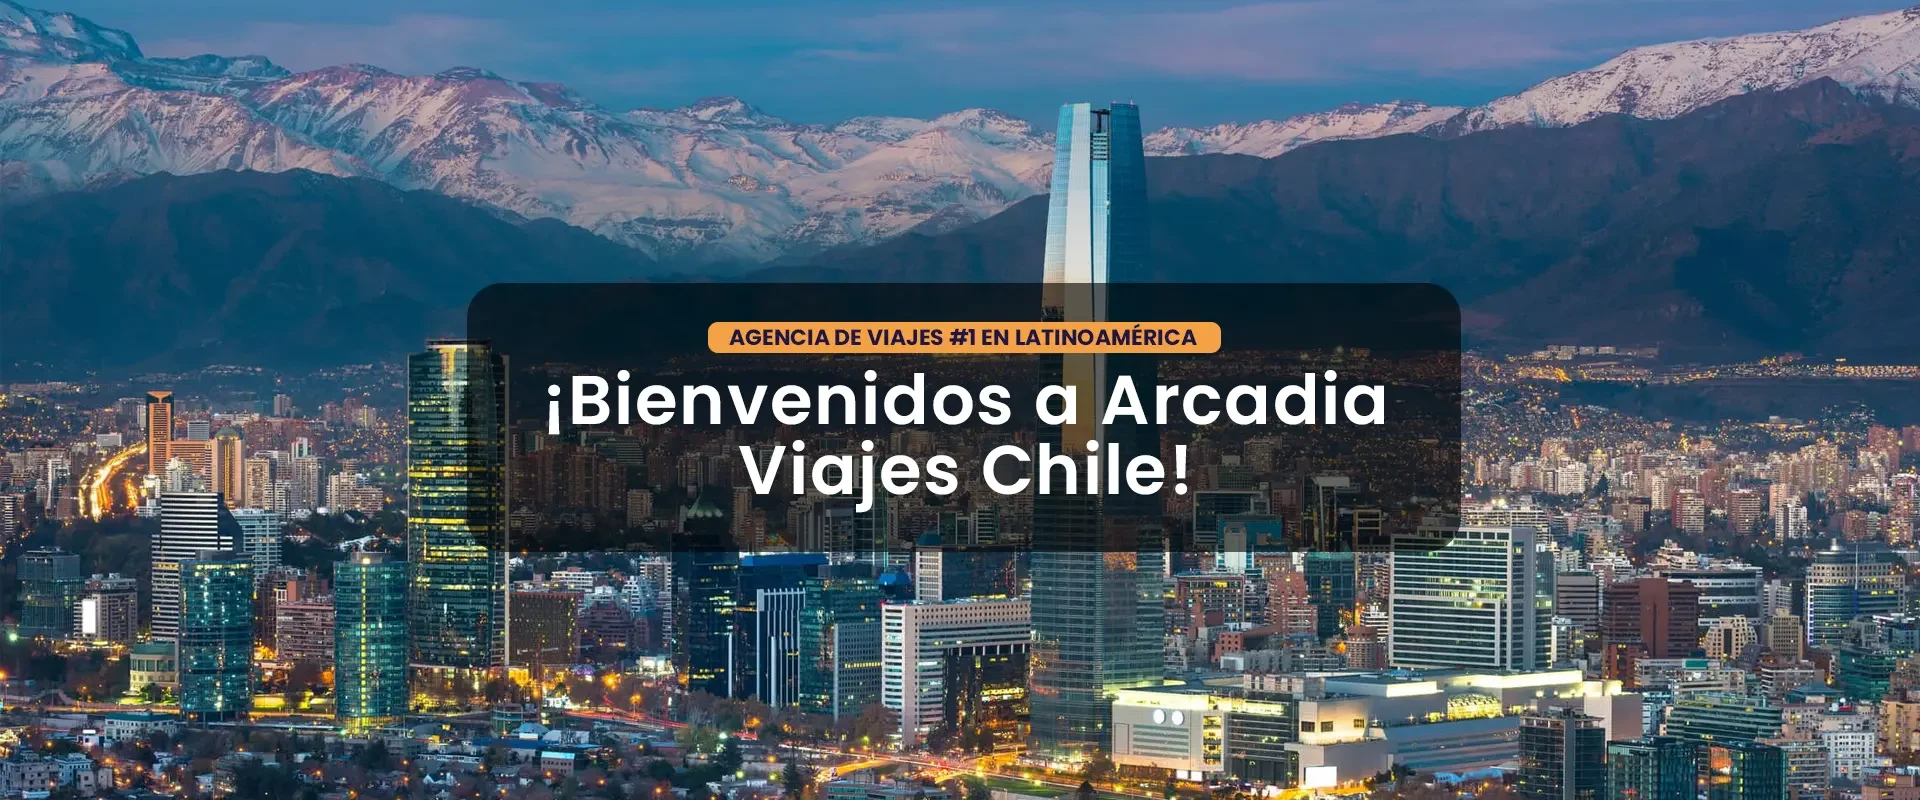 Arcadia Viajes Chile